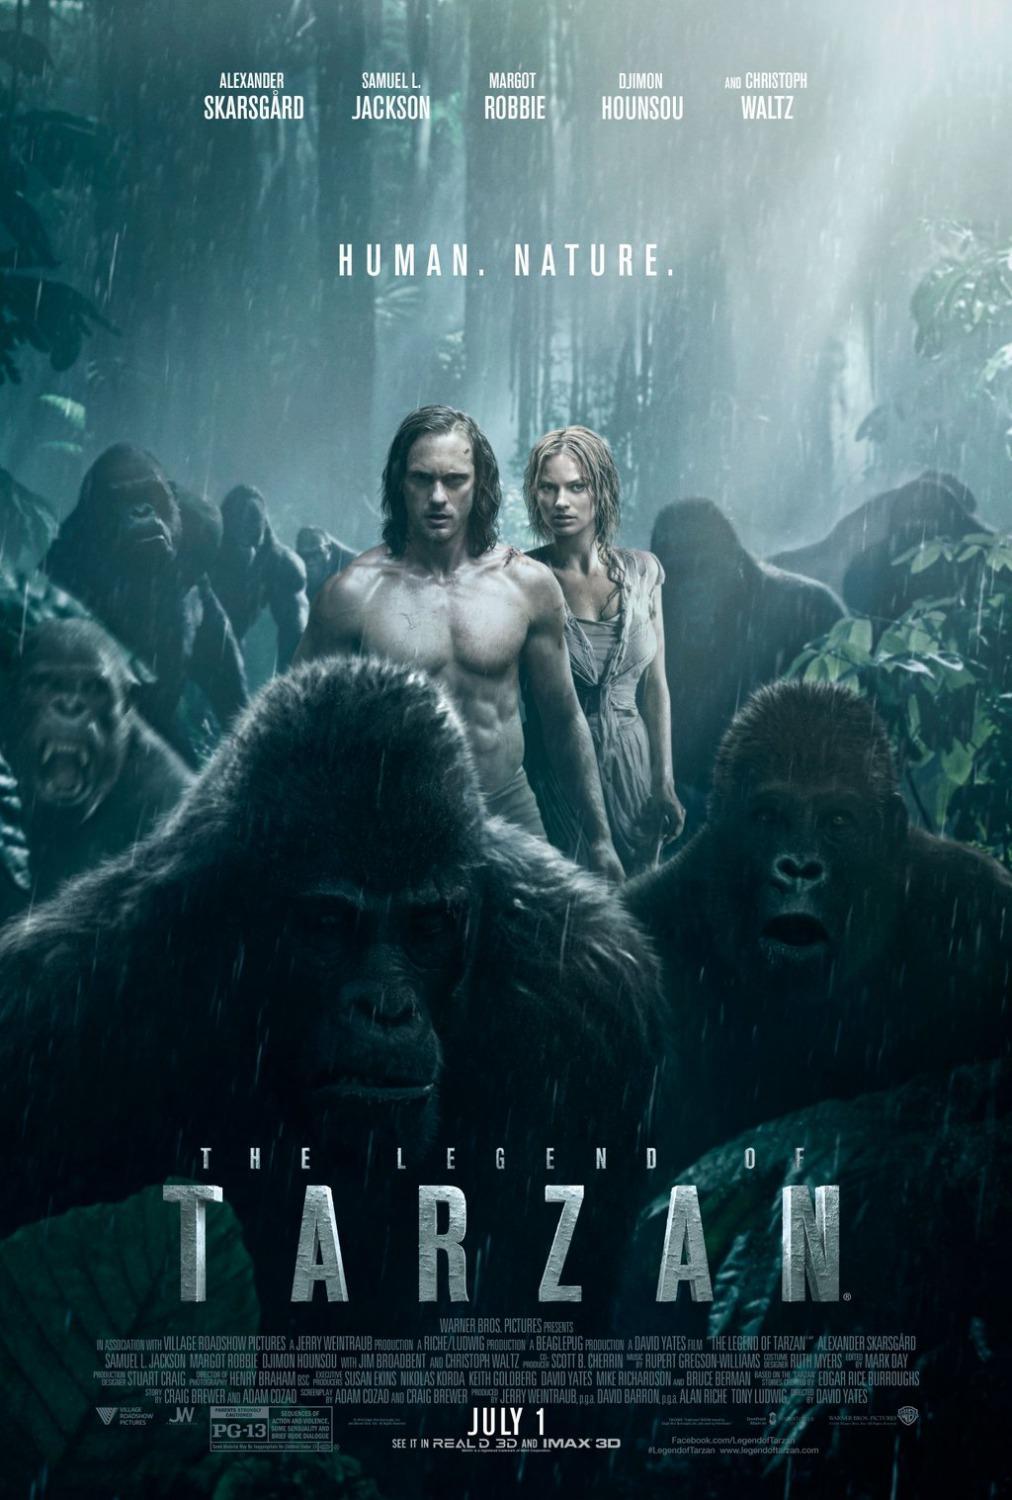 Постер фильма Тарзан. Легенда | Legend of Tarzan